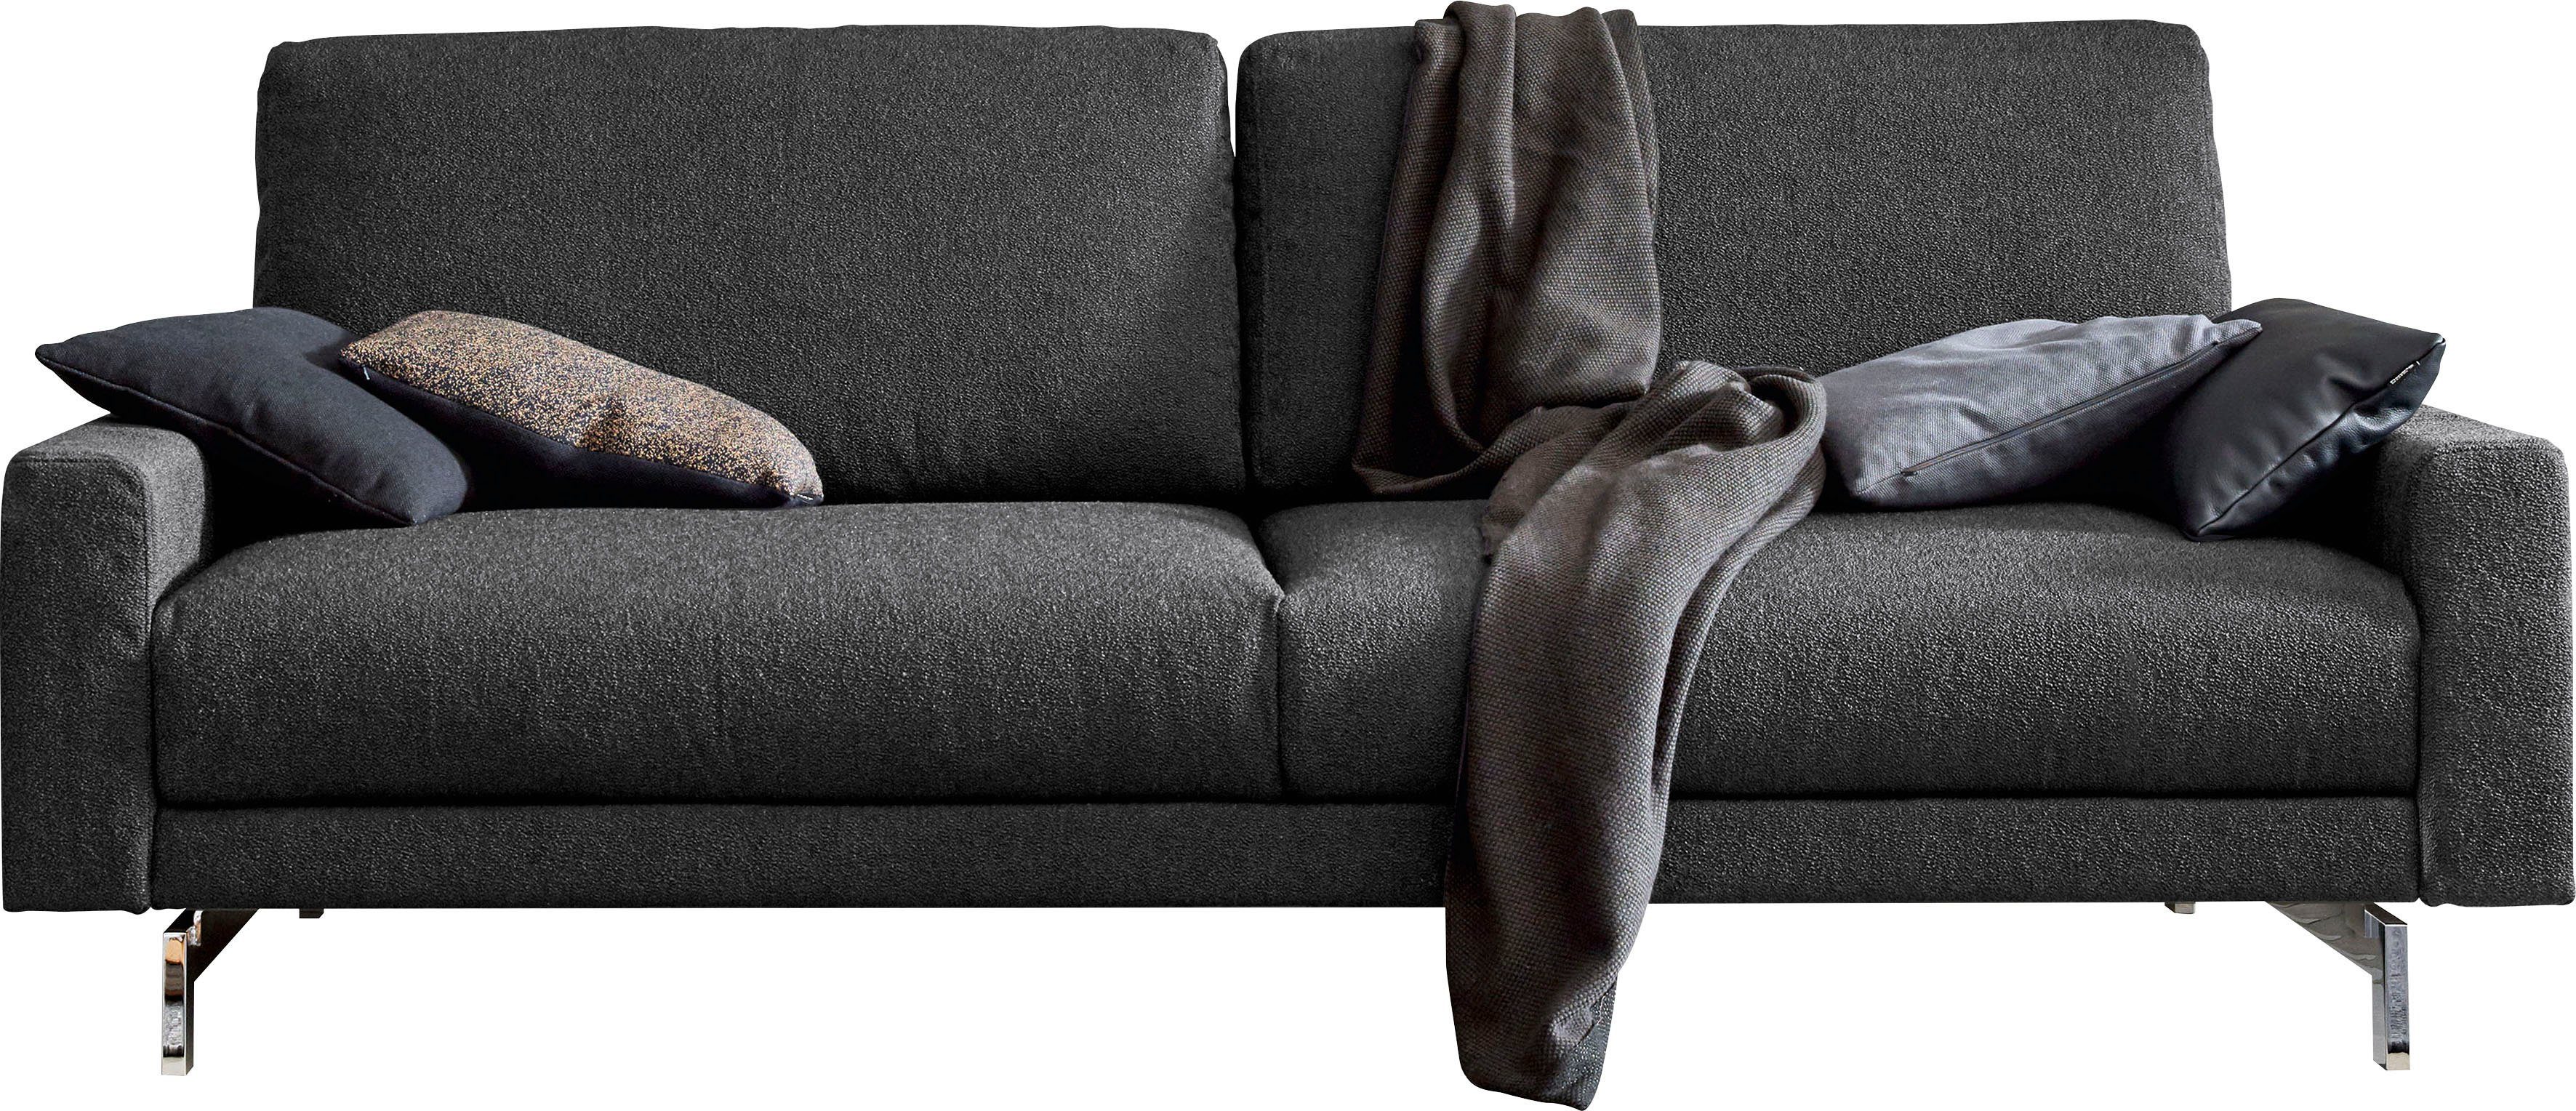 hülsta sofa 2-Sitzer hs.450, Armlehne chromfarben glänzend, Fuß cm niedrig, Breite 164